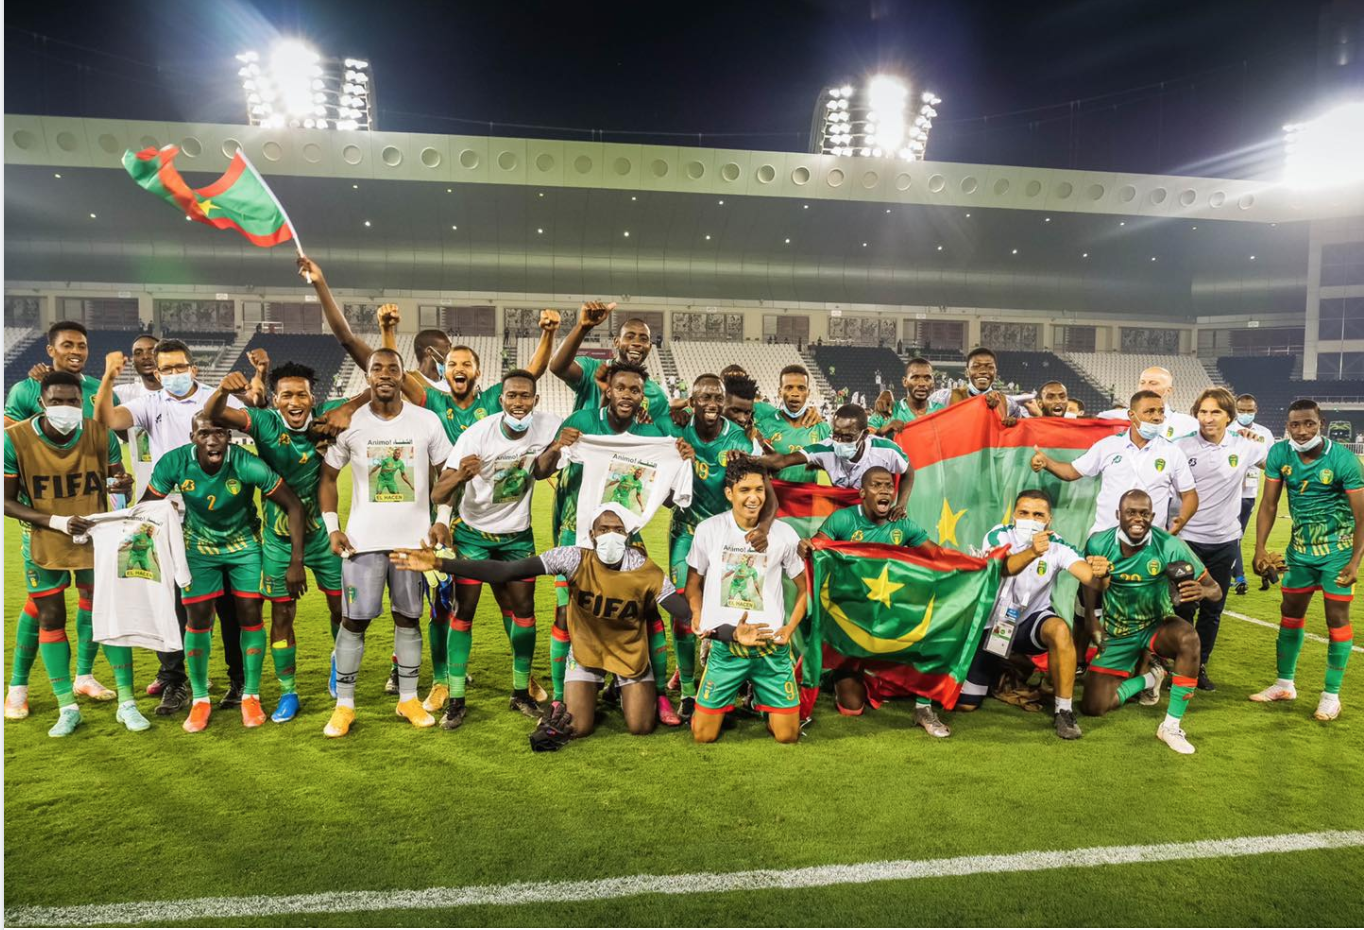 Coupe Arabe FIFA : la Mauritanie se qualifie et rejoint la Tunisie